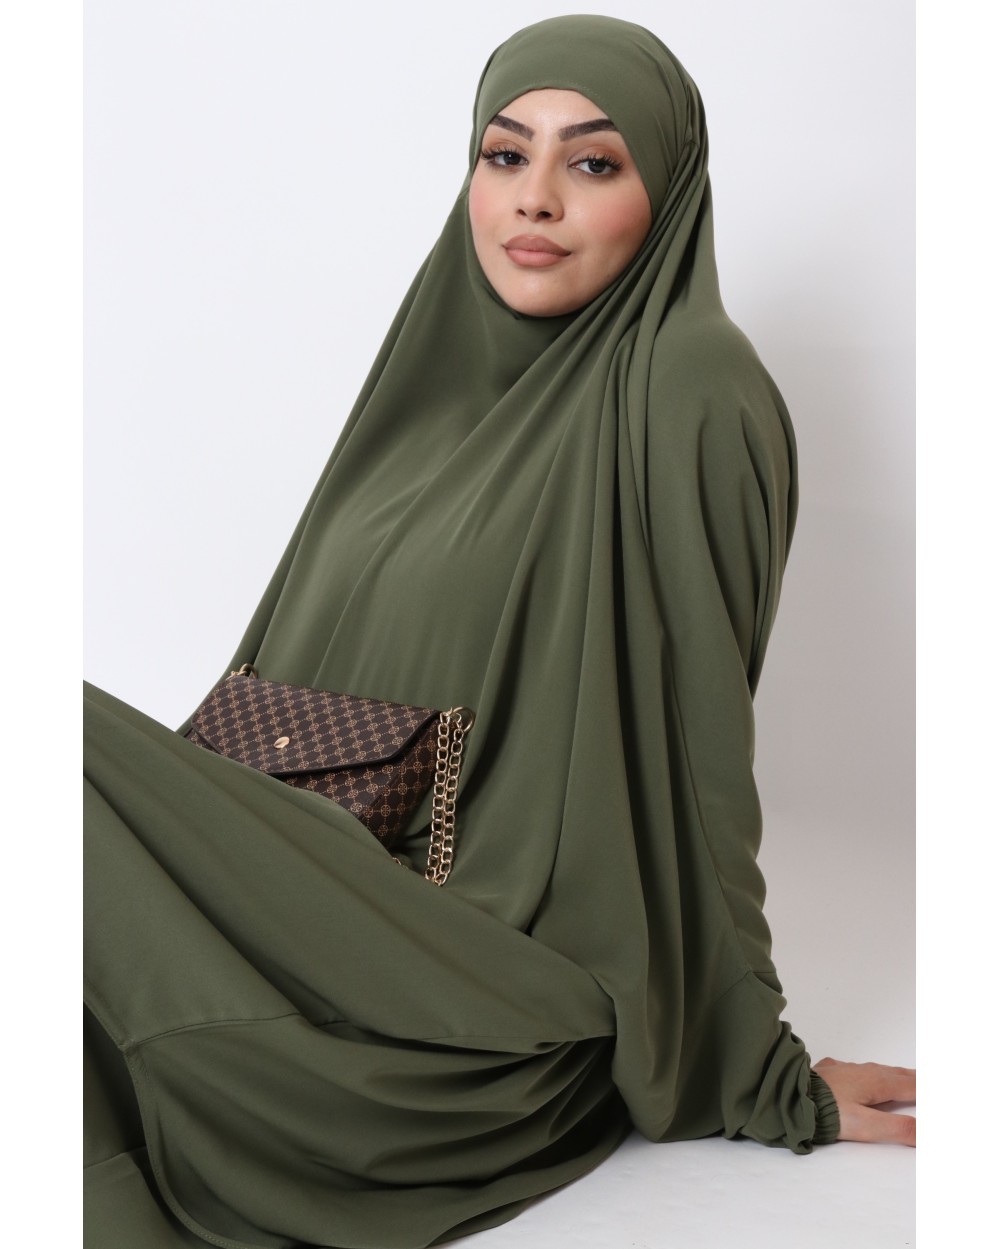 Jilbab 2 pieces harem pants Jamila Size 3 Color Khaki Size 3 Color Khaki